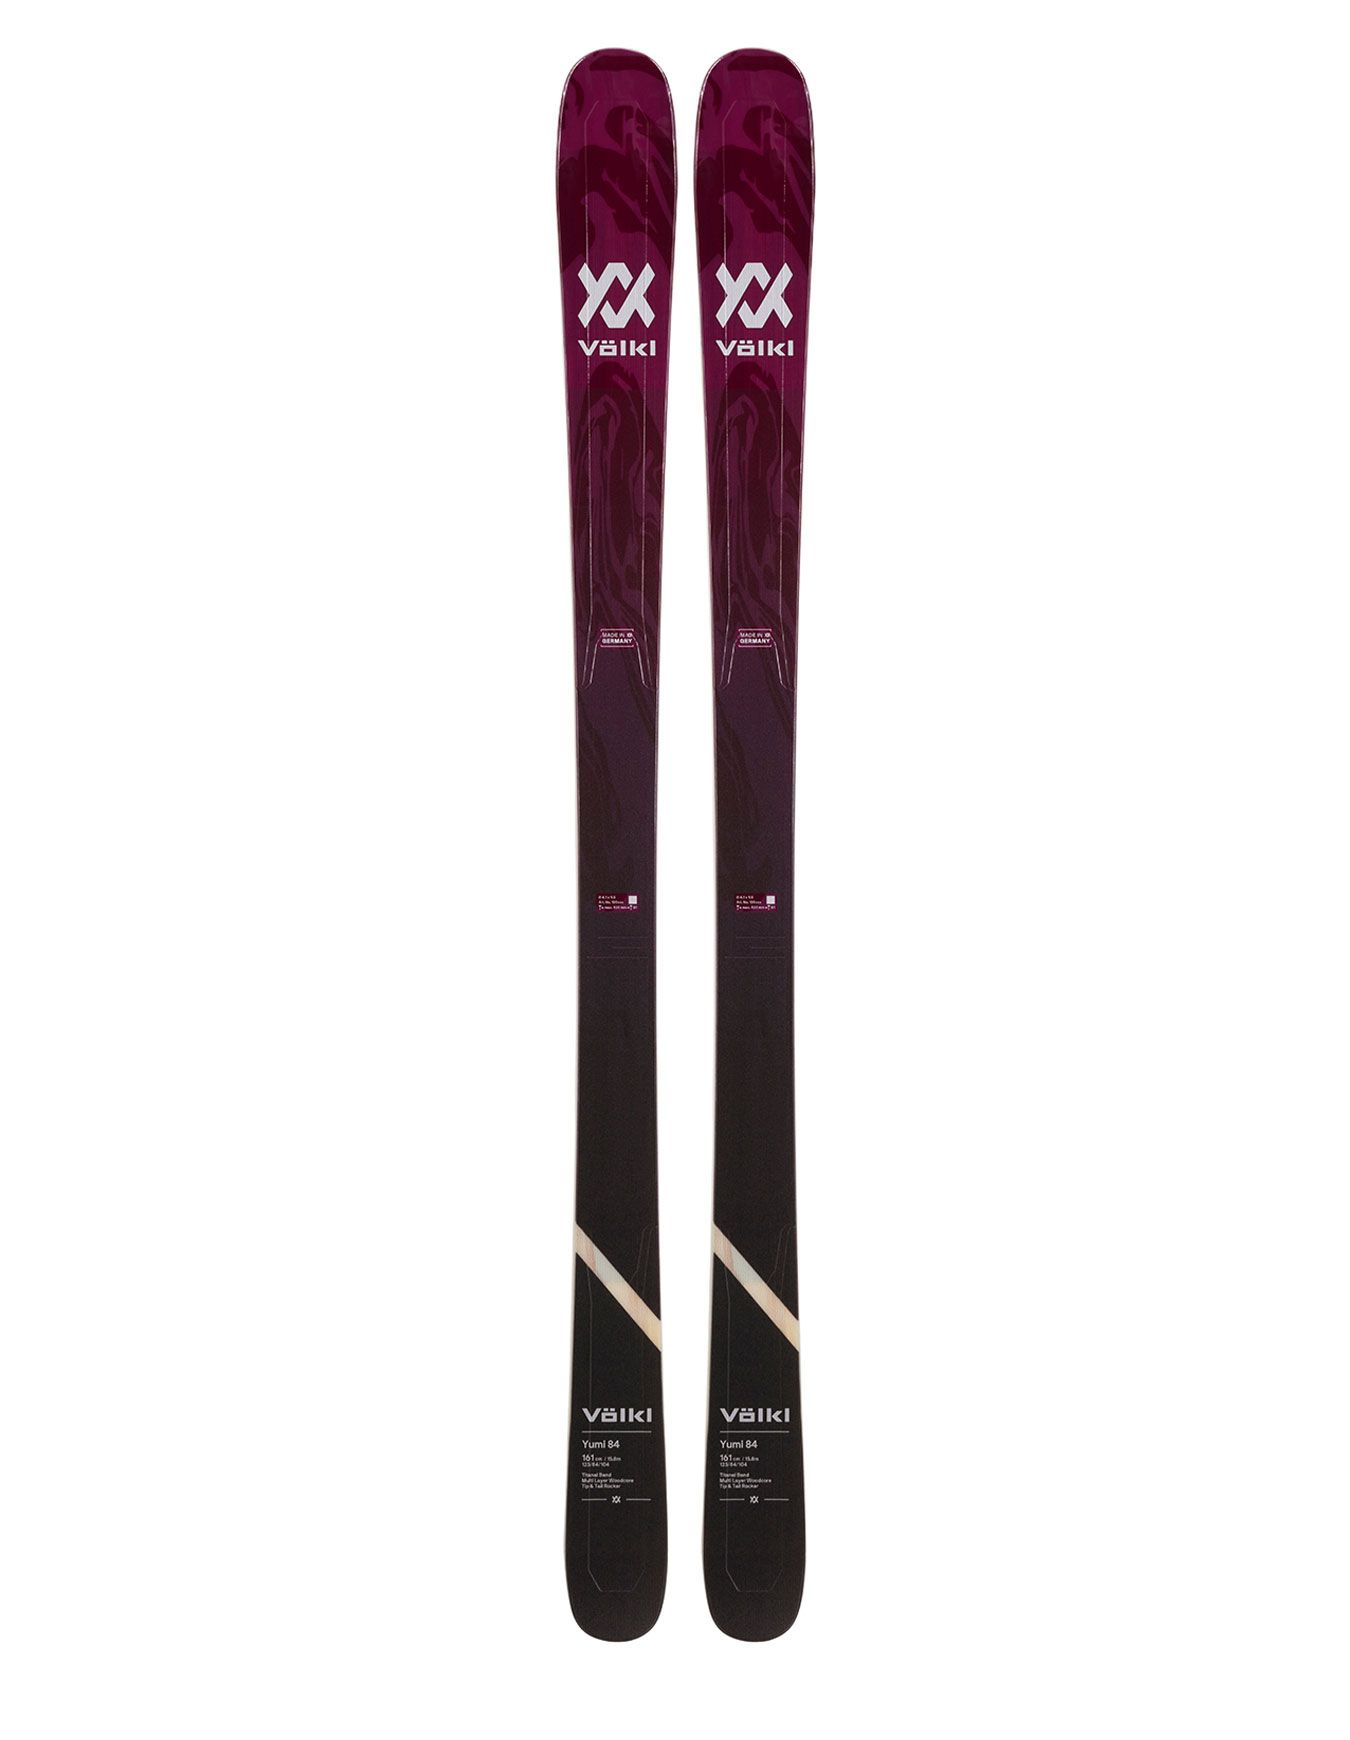 Pack Ski YUMI 2021 + Fixations